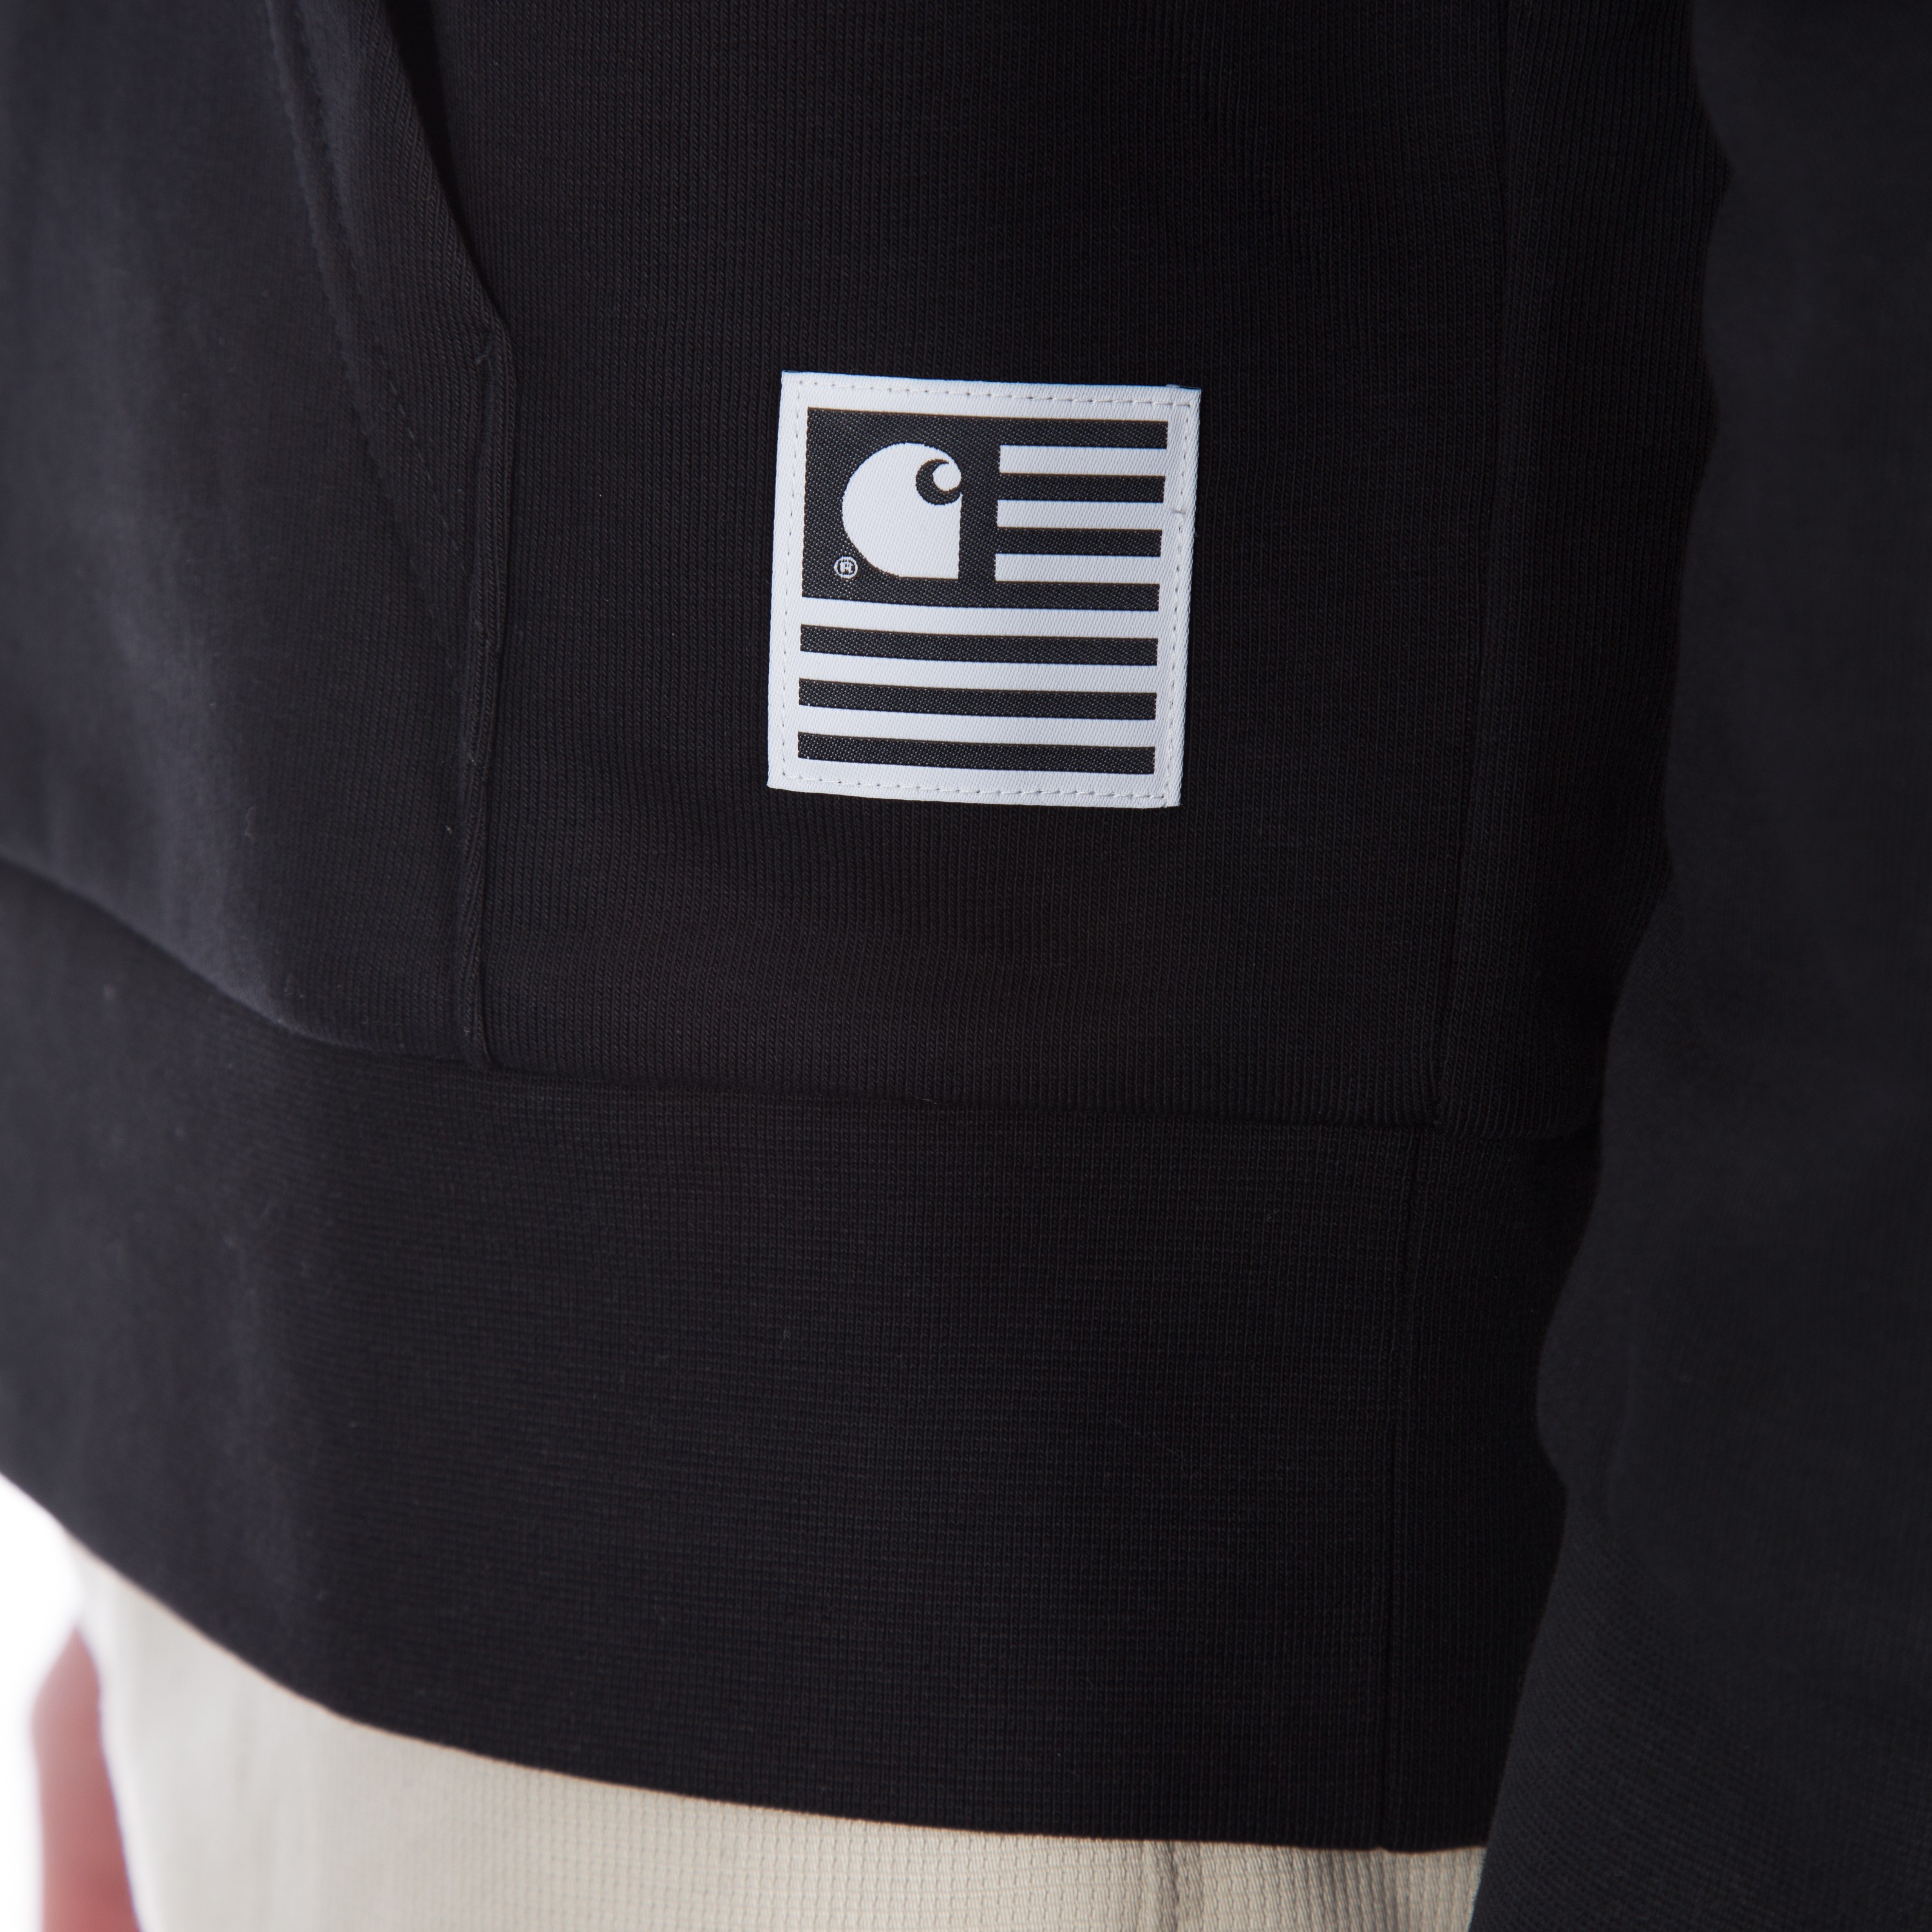 Carhartt State Flag Pullover Hooded Sweatshirt (Black) - Consortium.